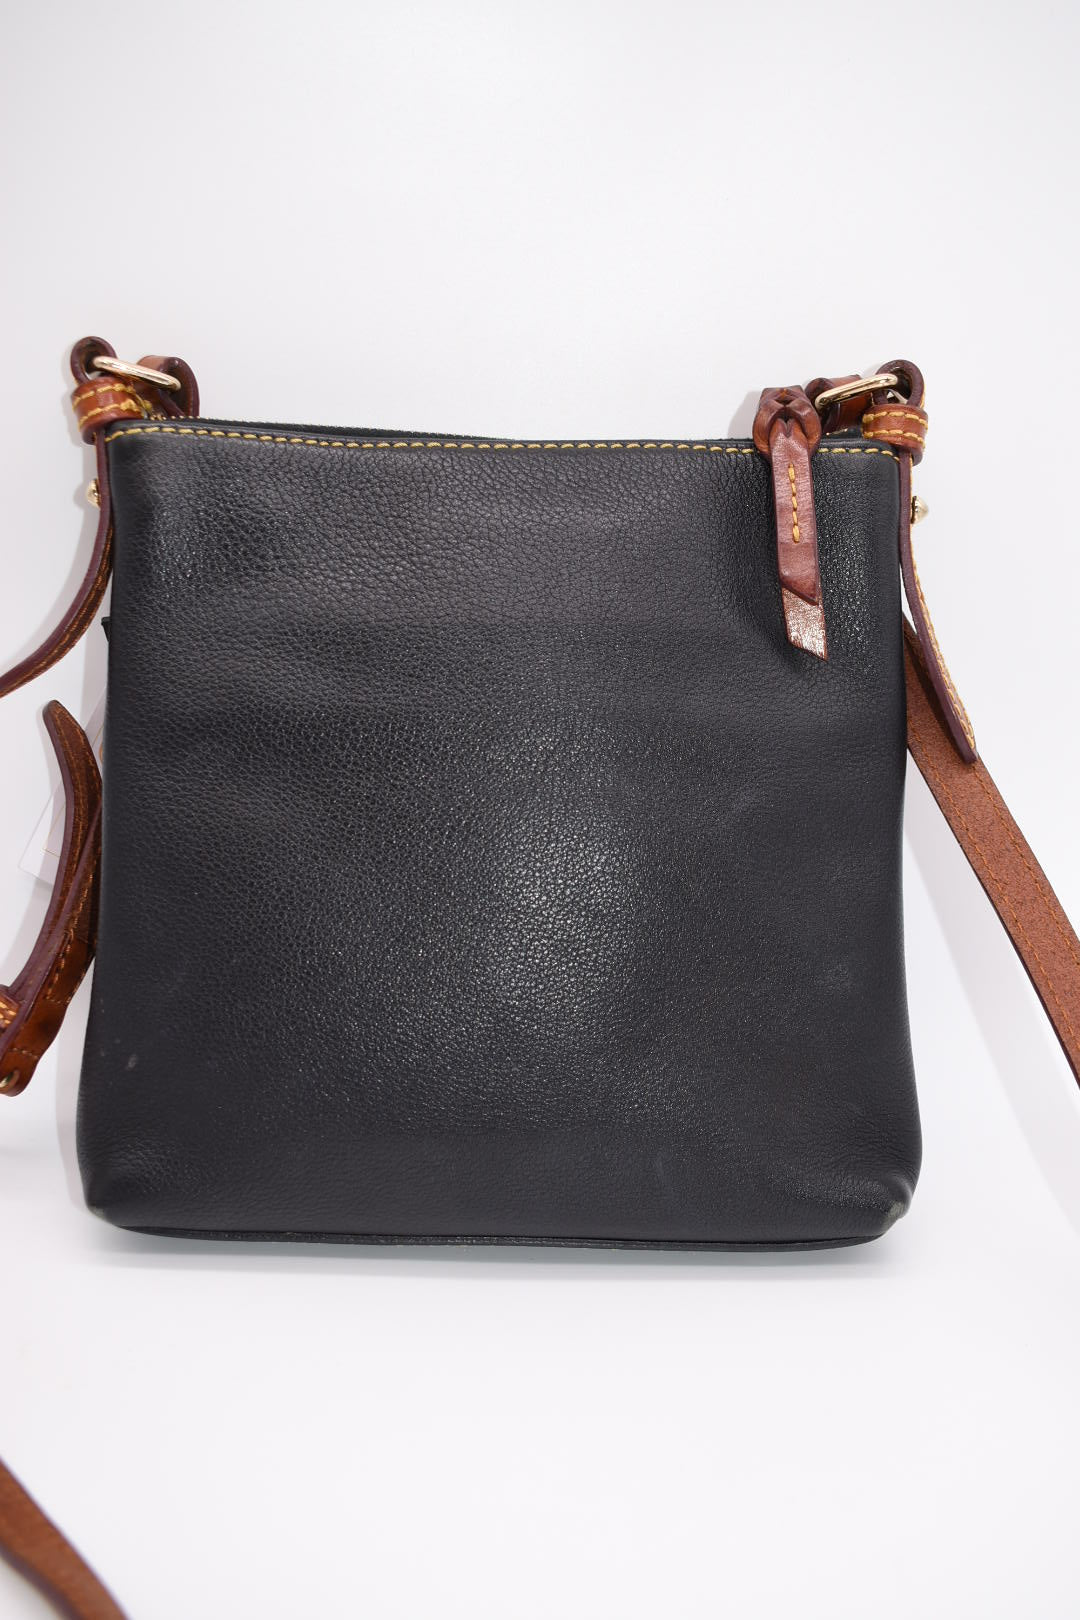 Dooney & Bourke Dillen Leather Carrier Black Crossbody Bag